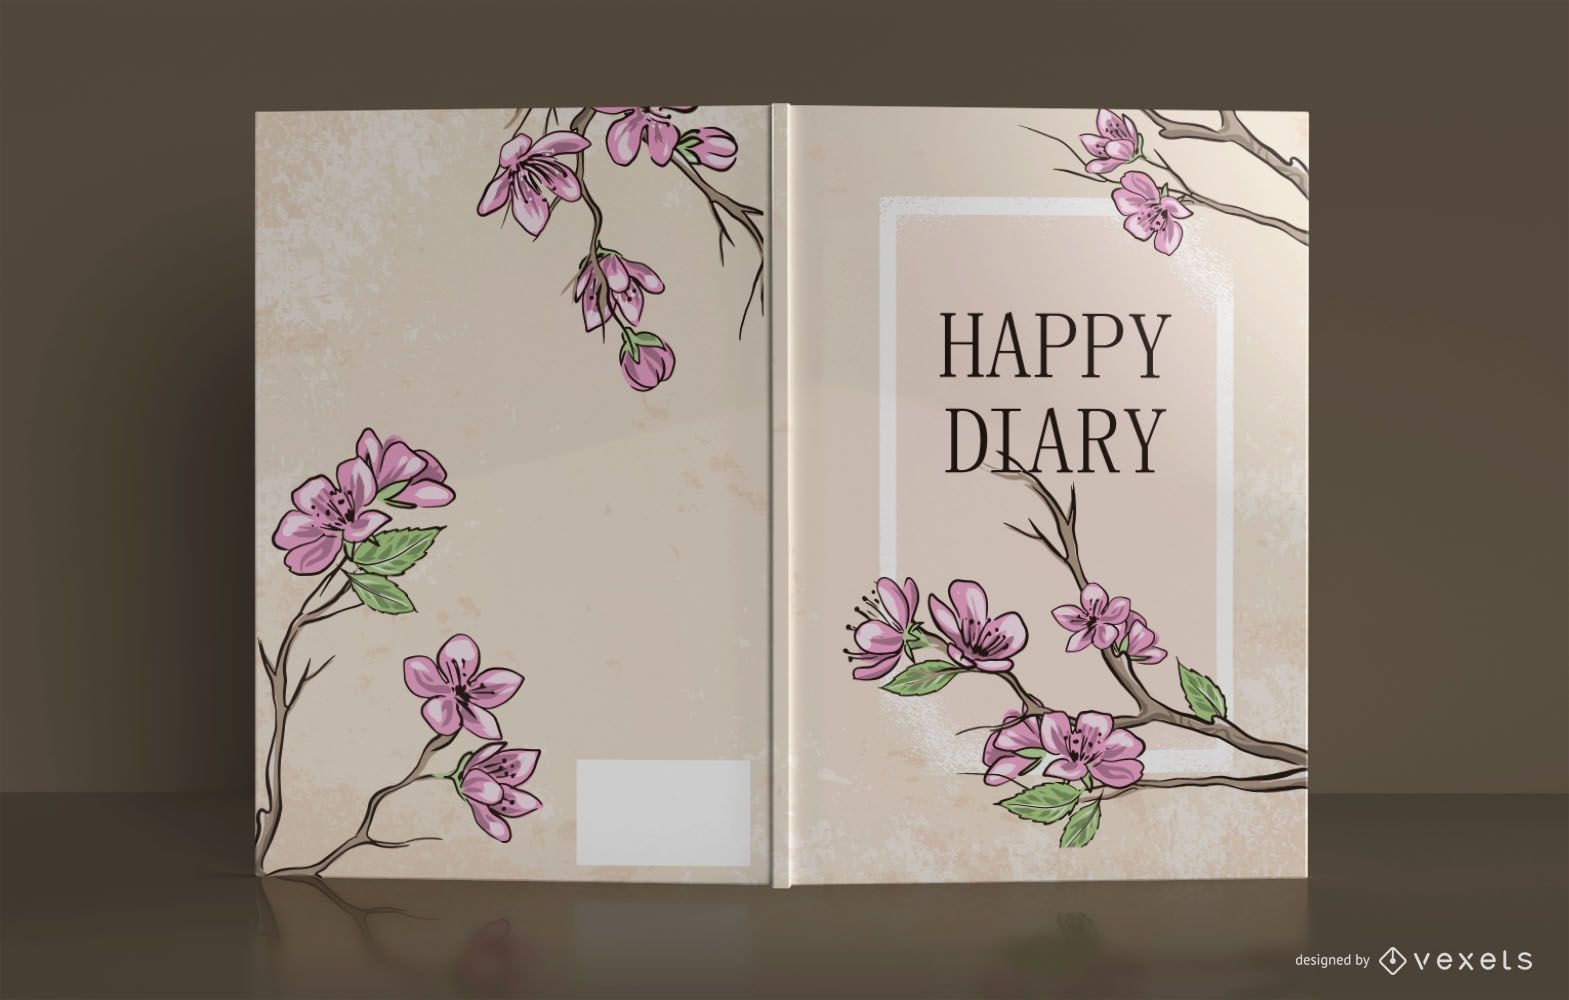 Design floral da capa do livro feliz di?rio